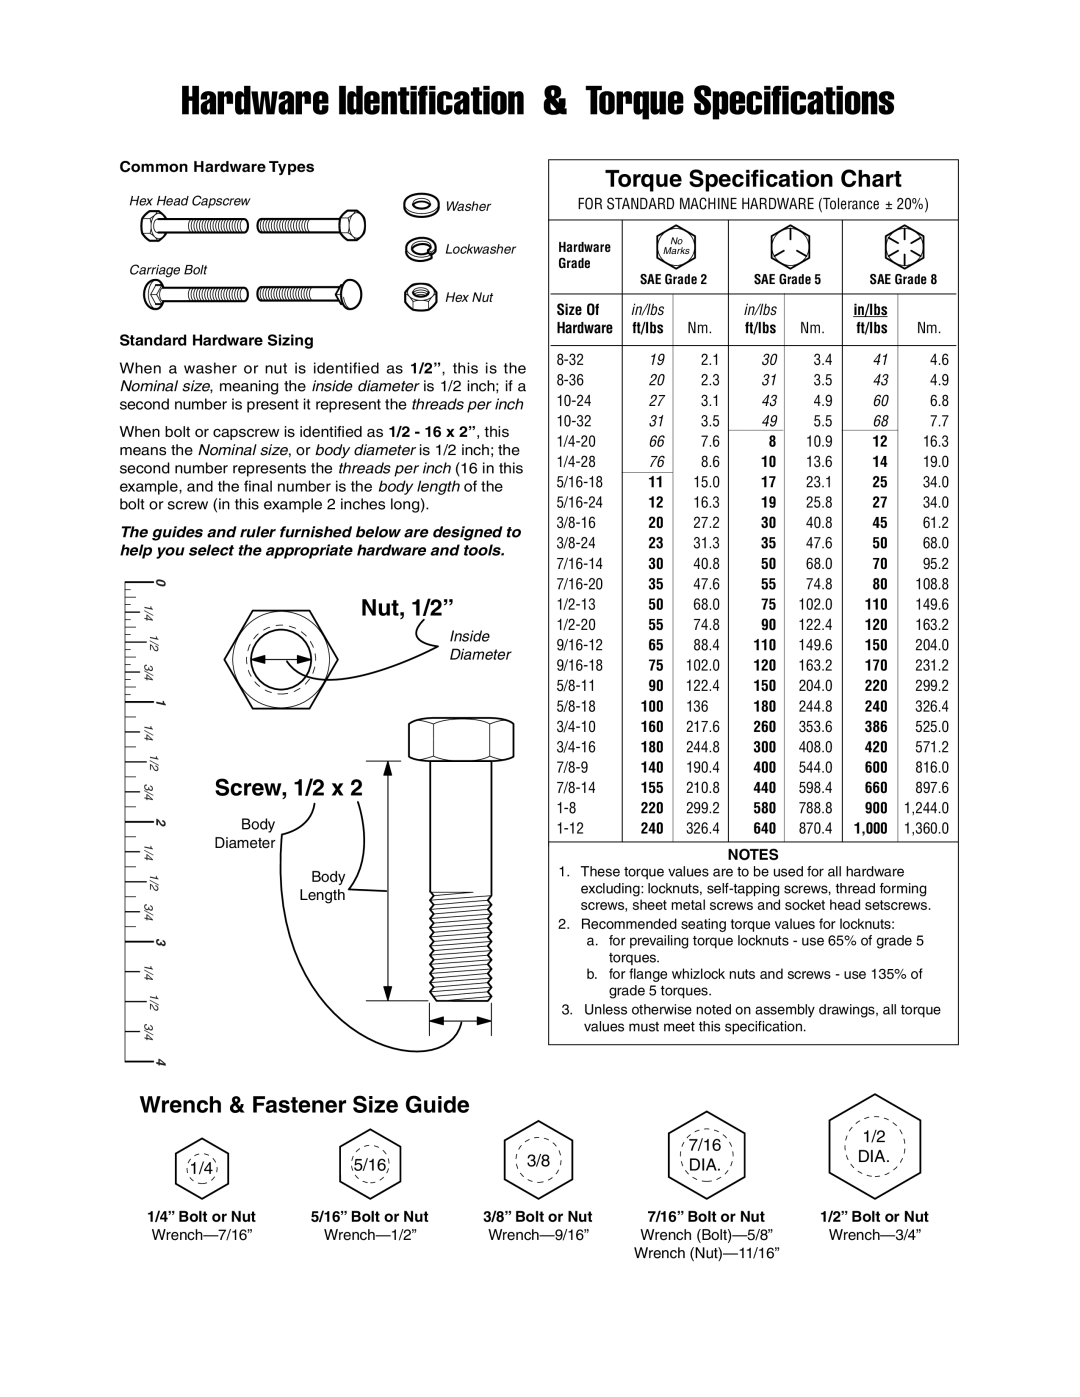 Simplicity 1694489 Hardware Identification & Torque Specifications, Torque Specification Chart, Nut, 1/2”, Screw, 1/2 